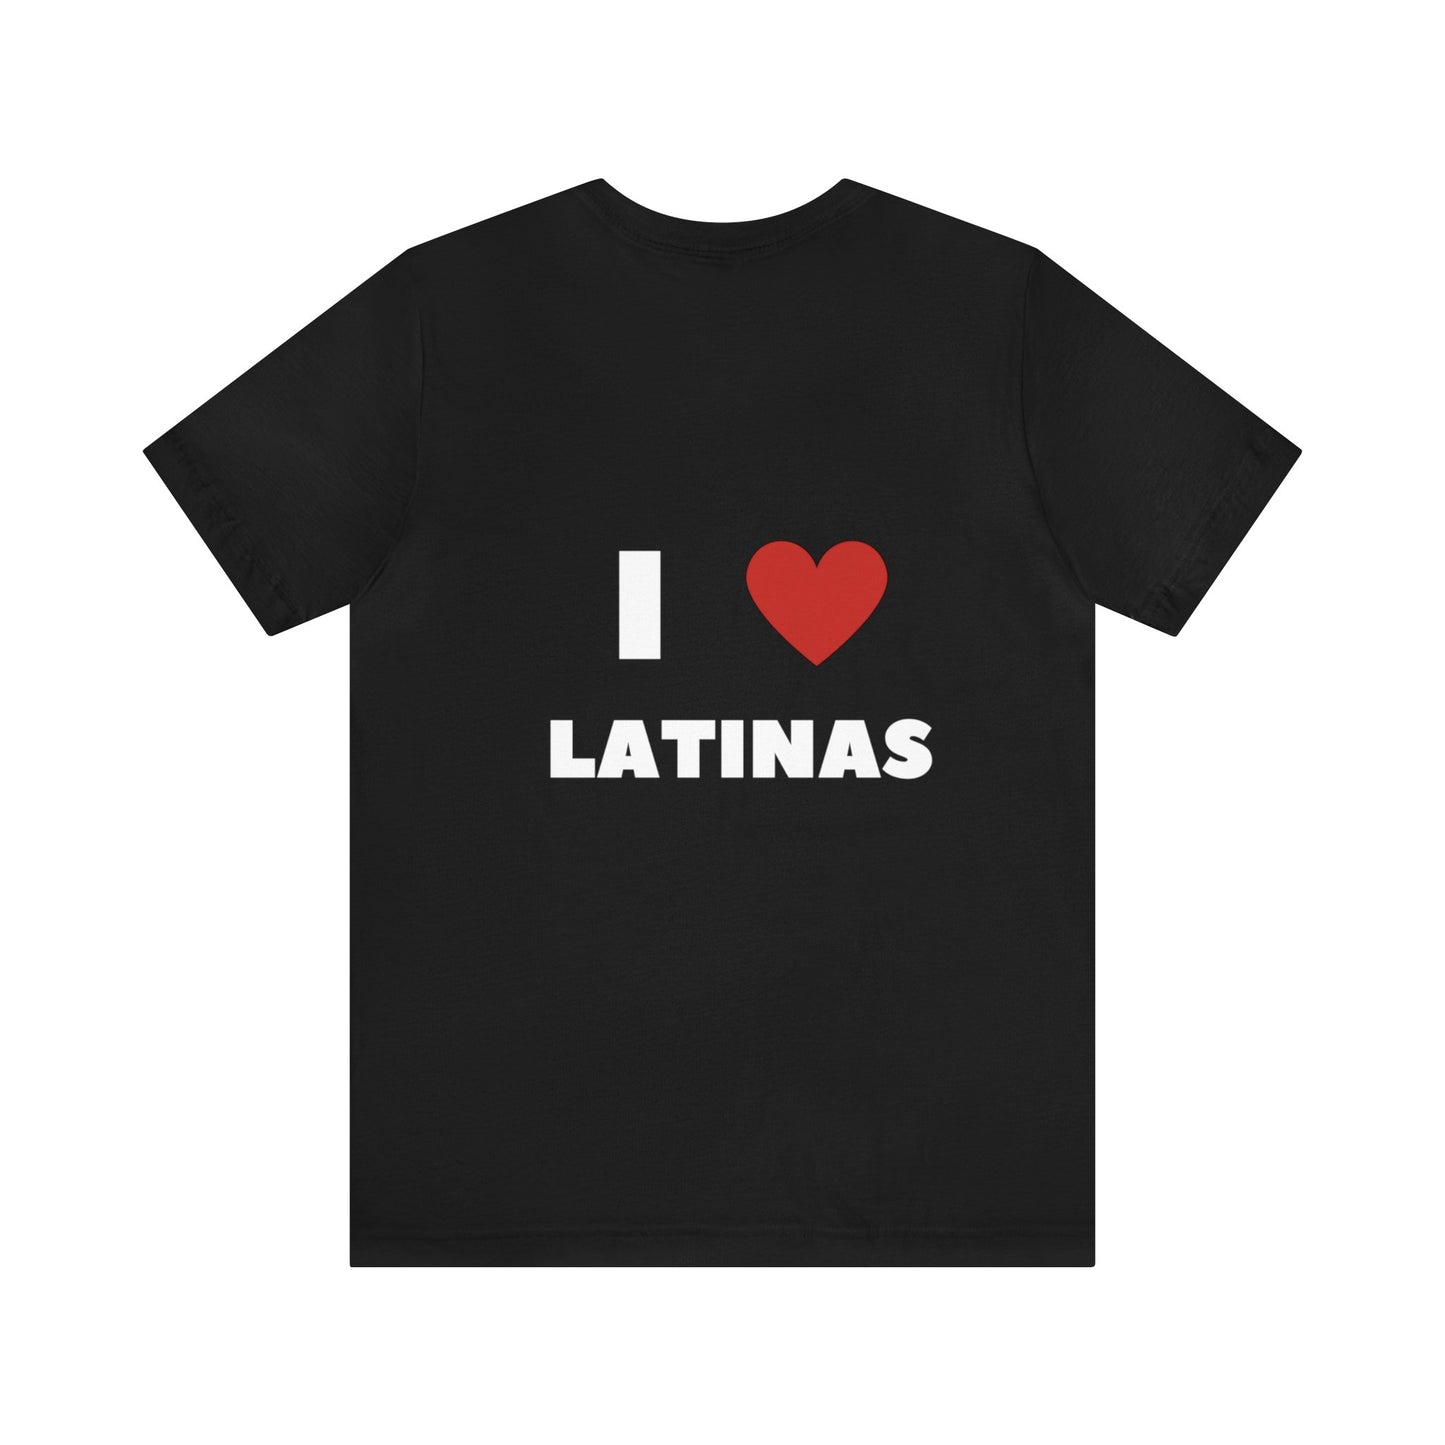 I love latinas t-shirt